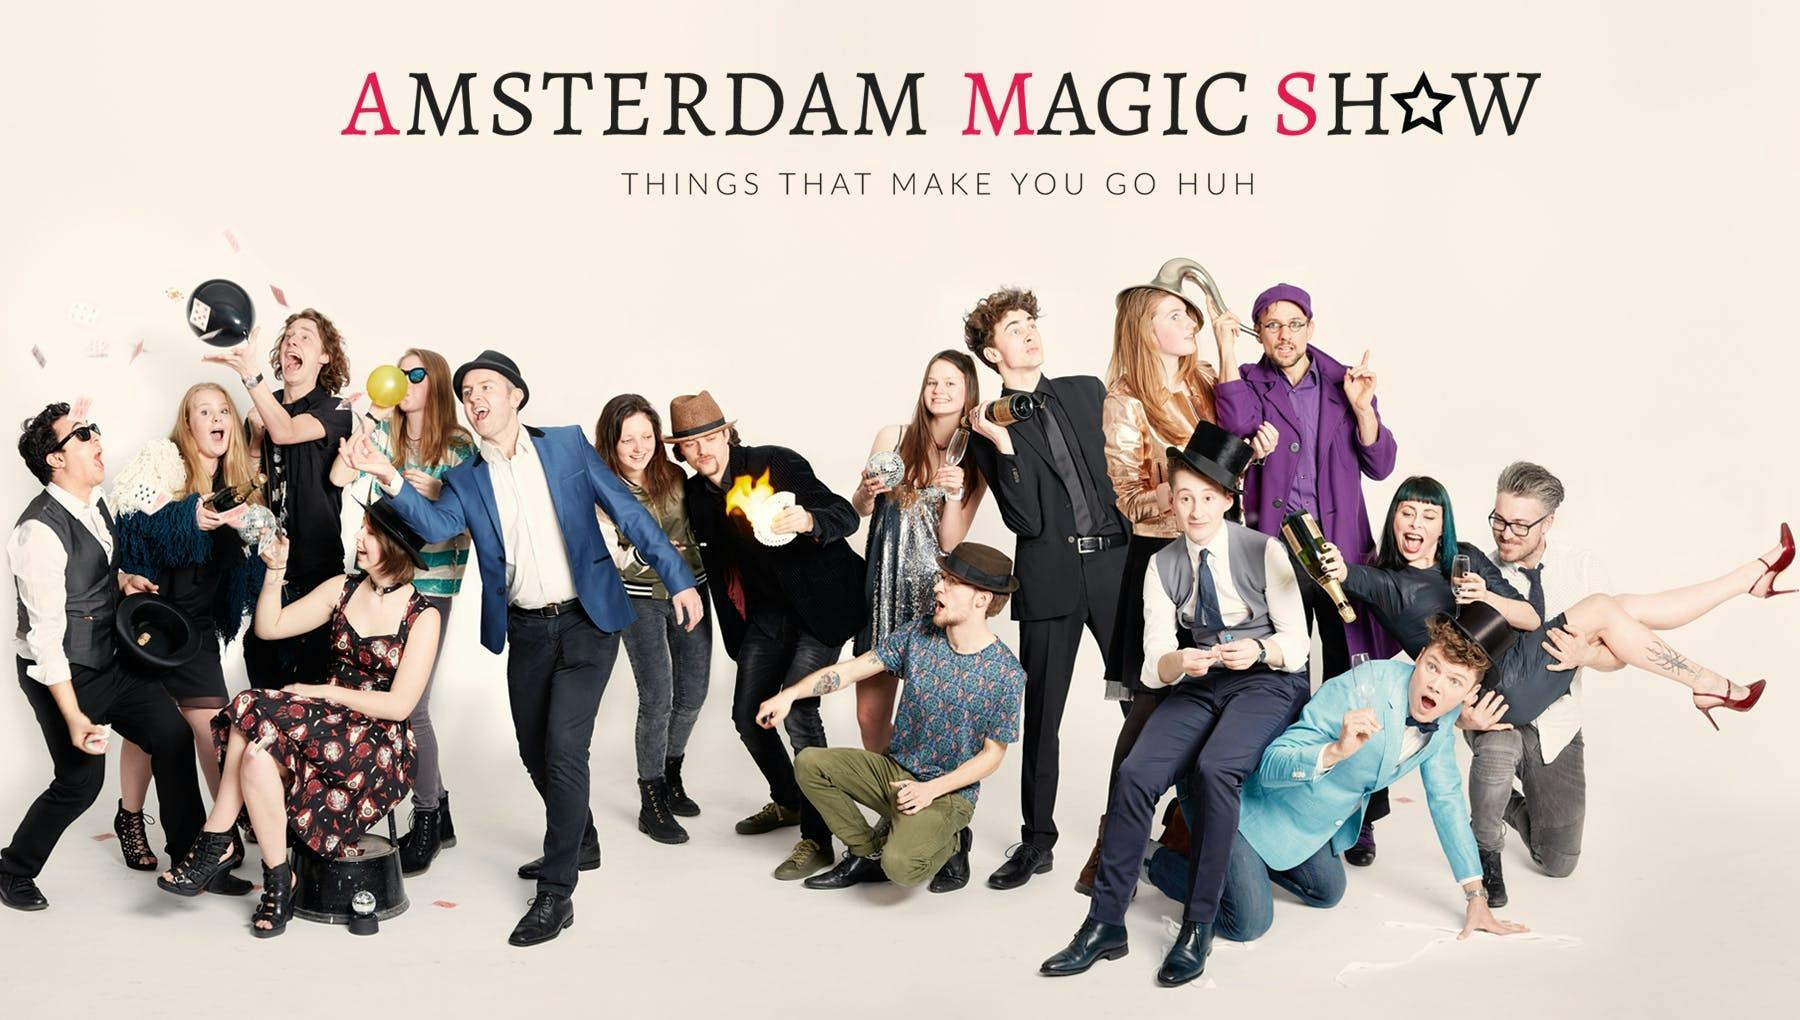 The Amsterdam Magic Show